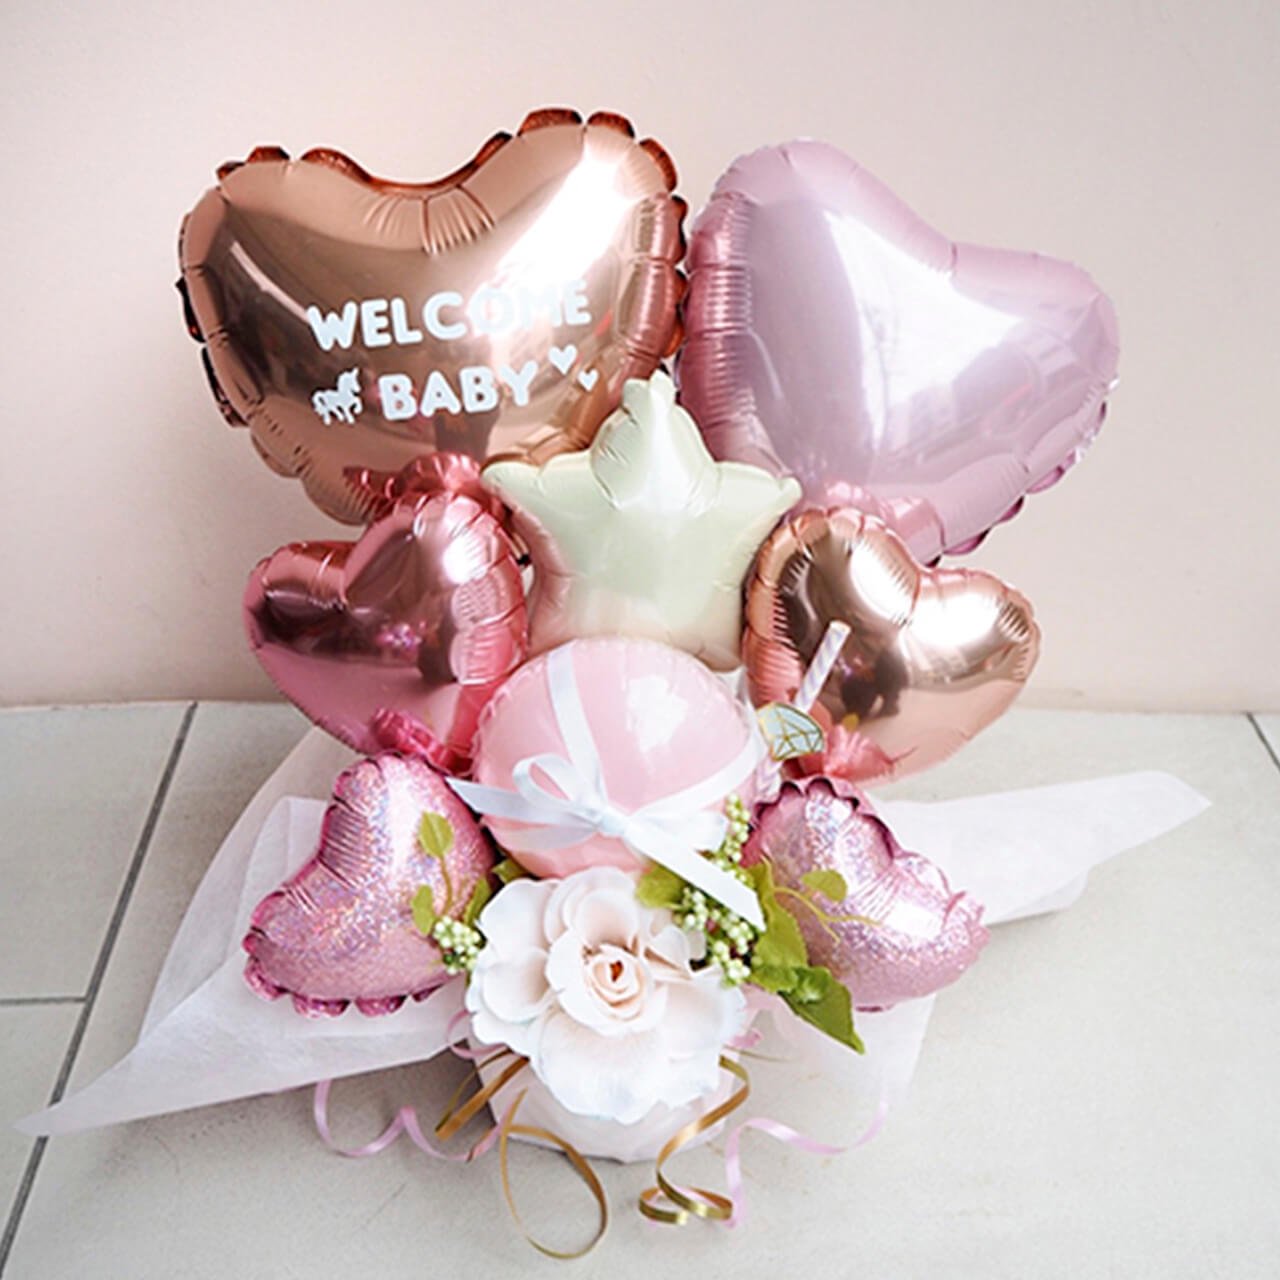 Merry-go-round Balloon Gift - Table top type - メリーゴーランドバルーンギフト